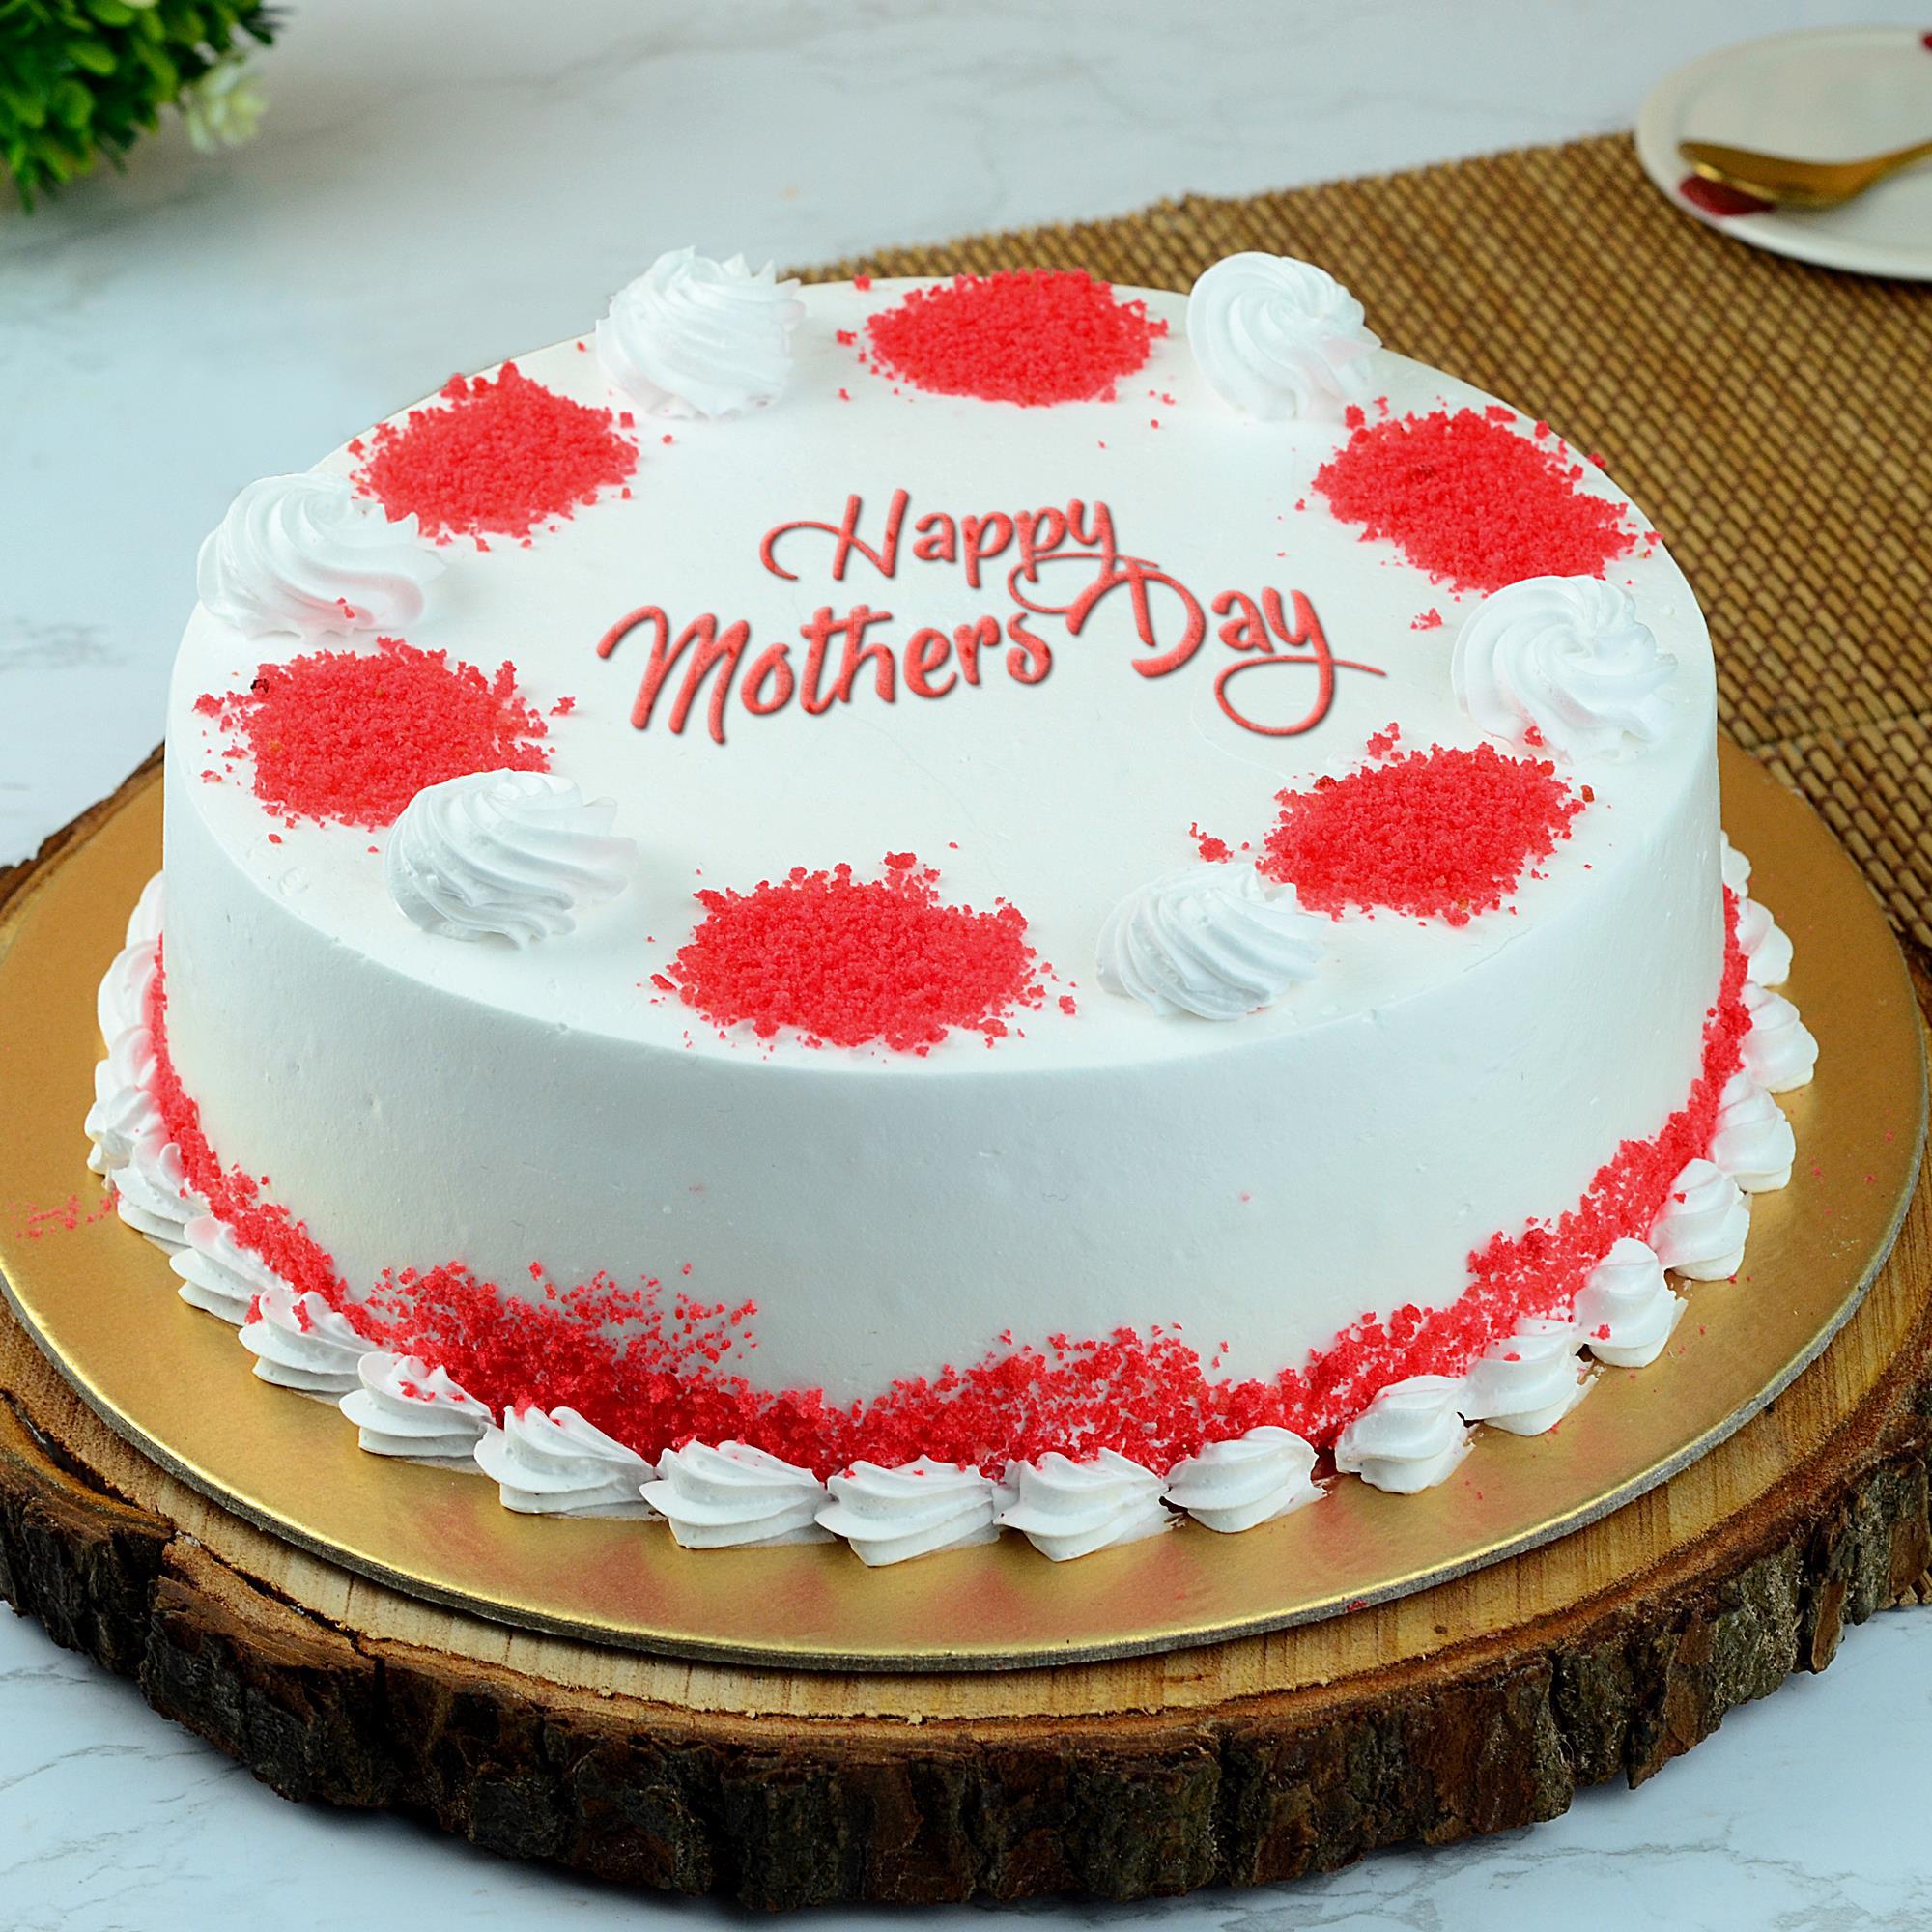 Buy/Send Red Velvet Cakes to Hyderabad - MyFlowerTree